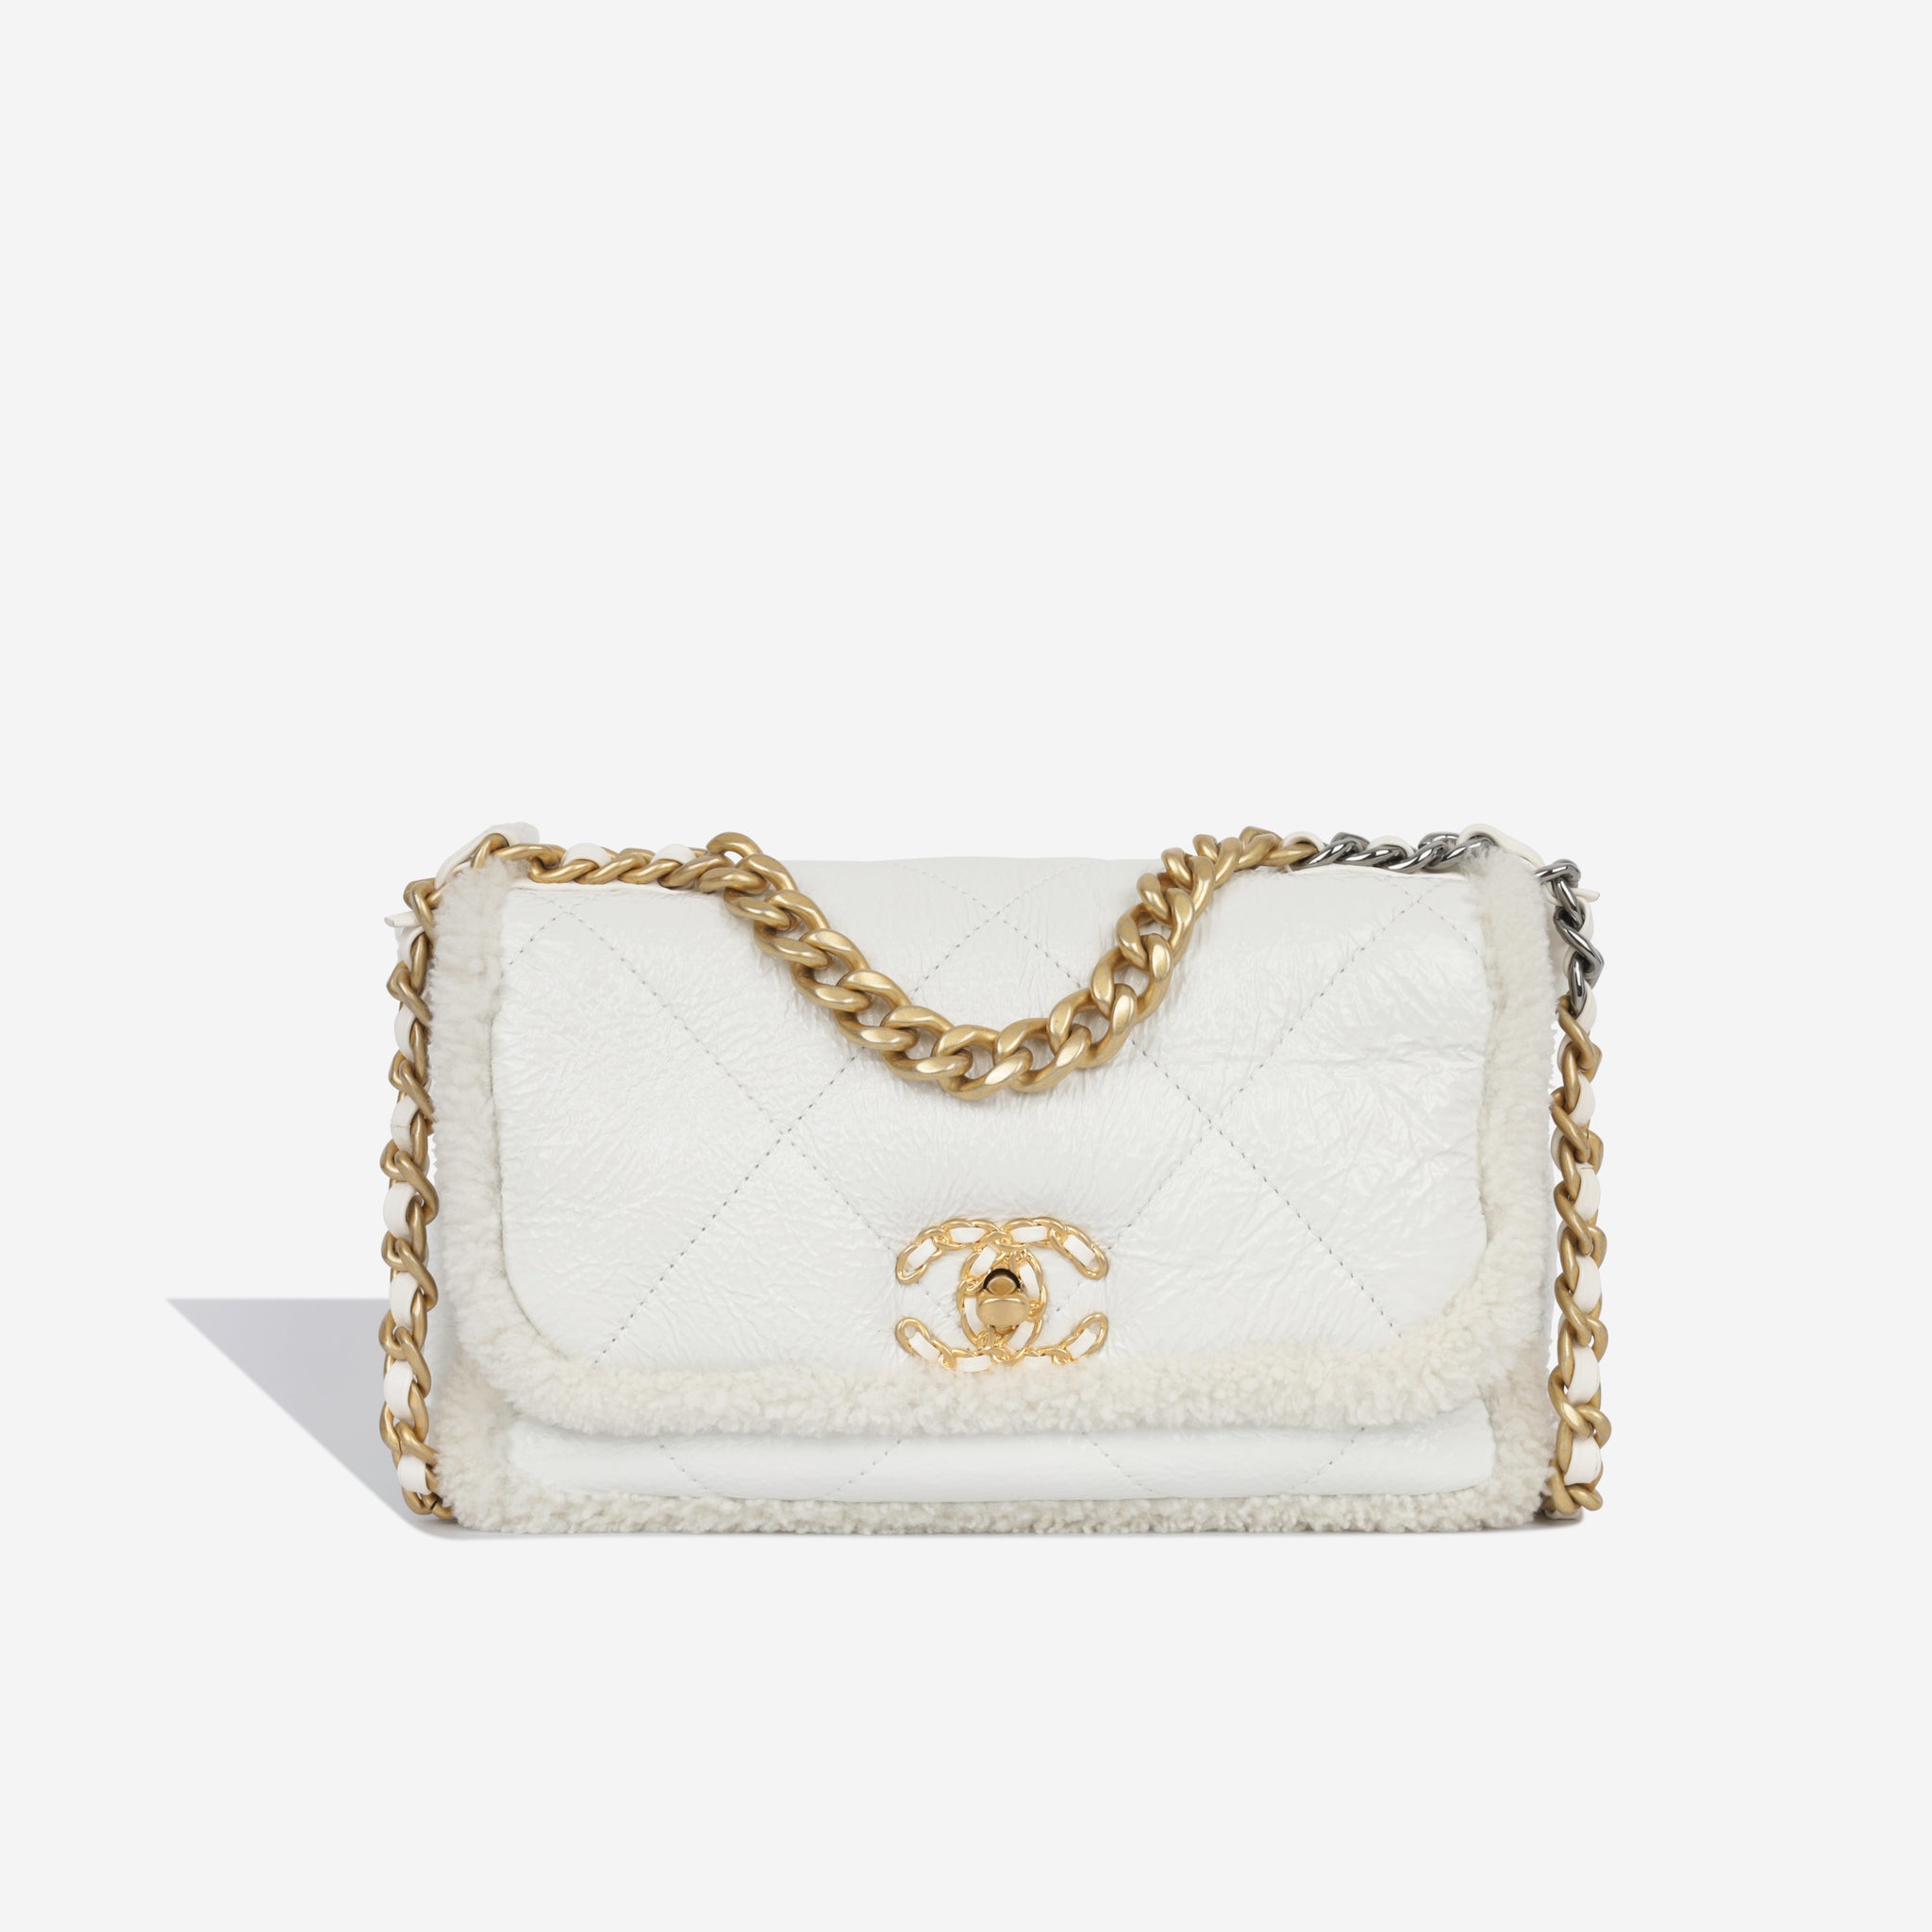 Chanel - Chanel 19 Flap Bag - White Calfskin Lambskin - MHW - Immaculate